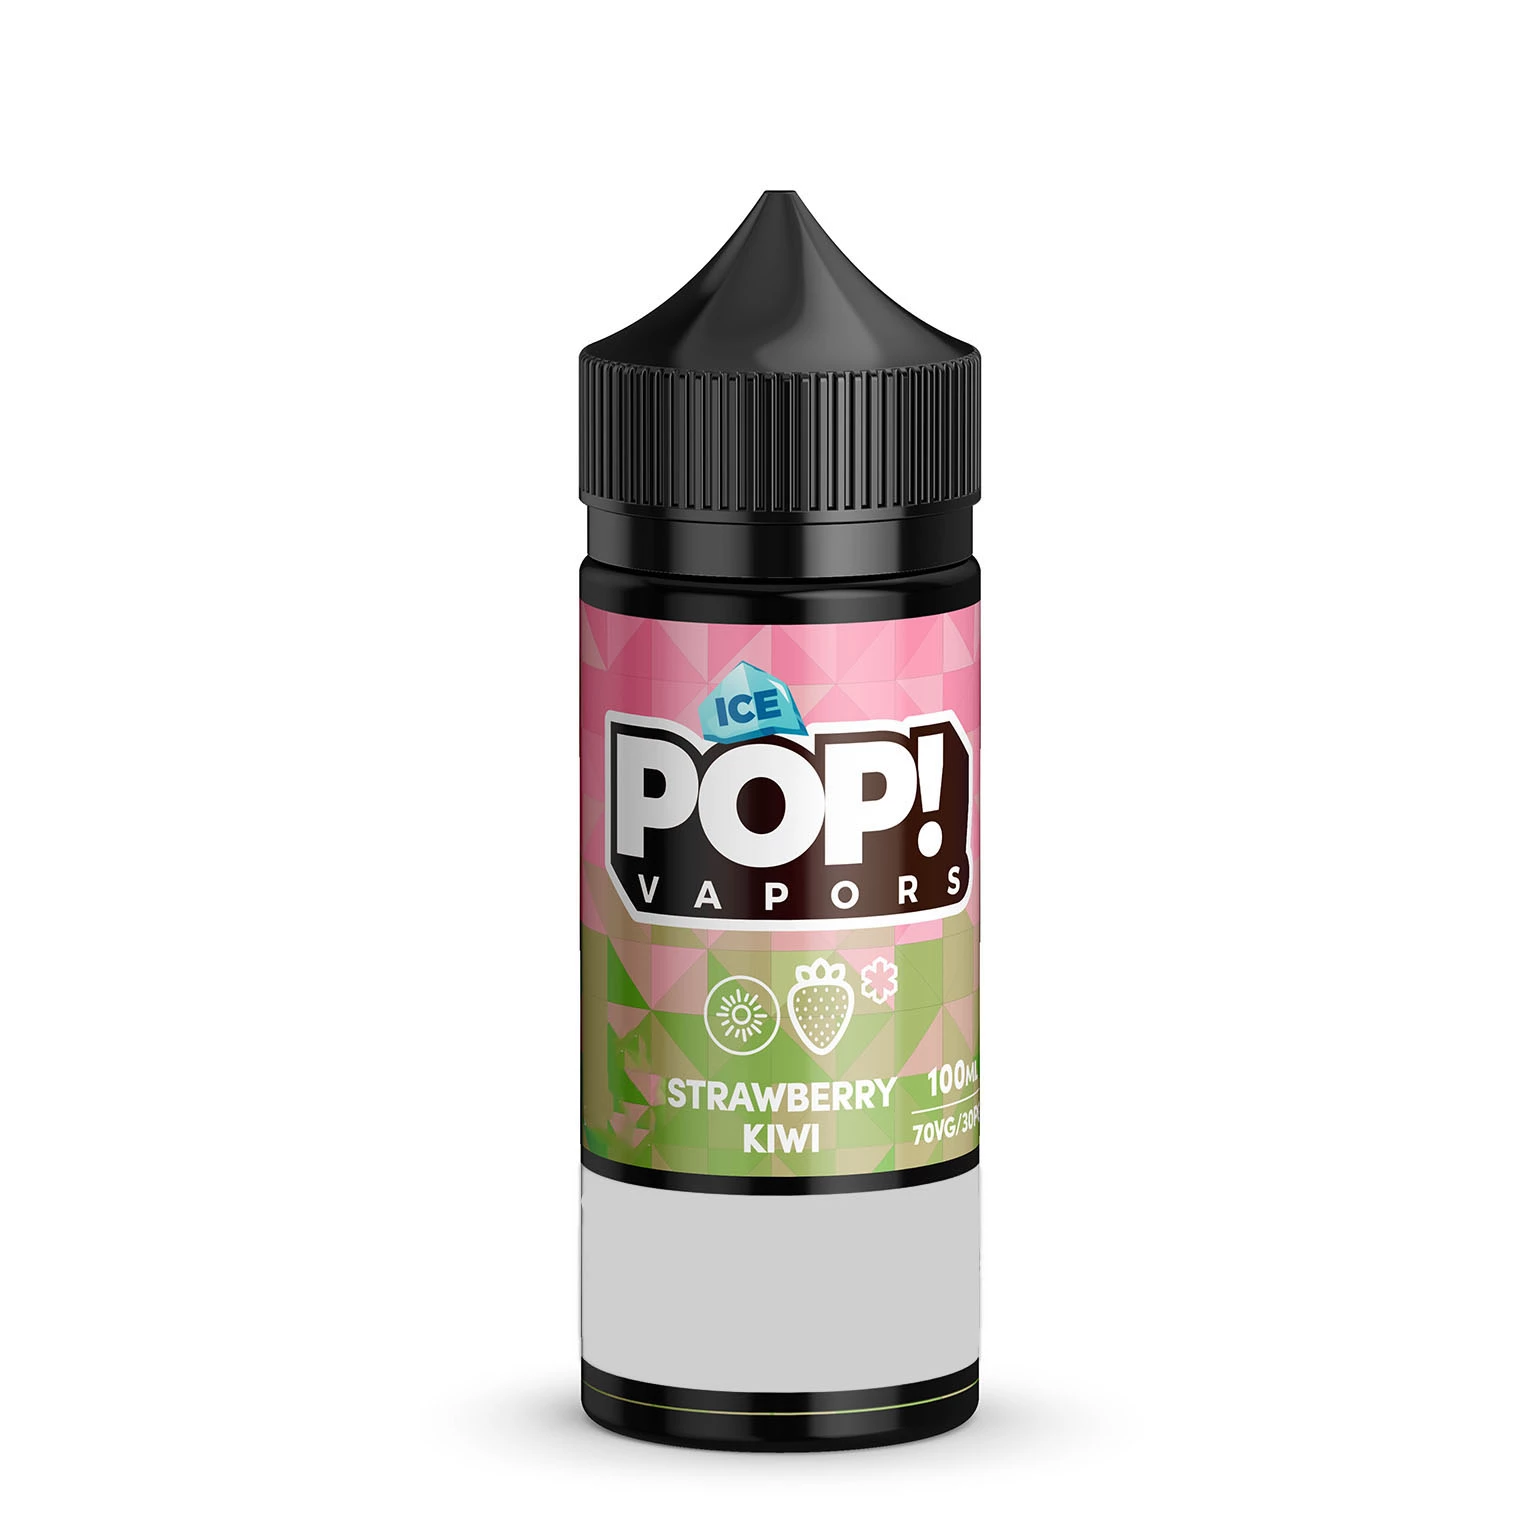 Iced-StrawberryKiwi-Pop!Vapors